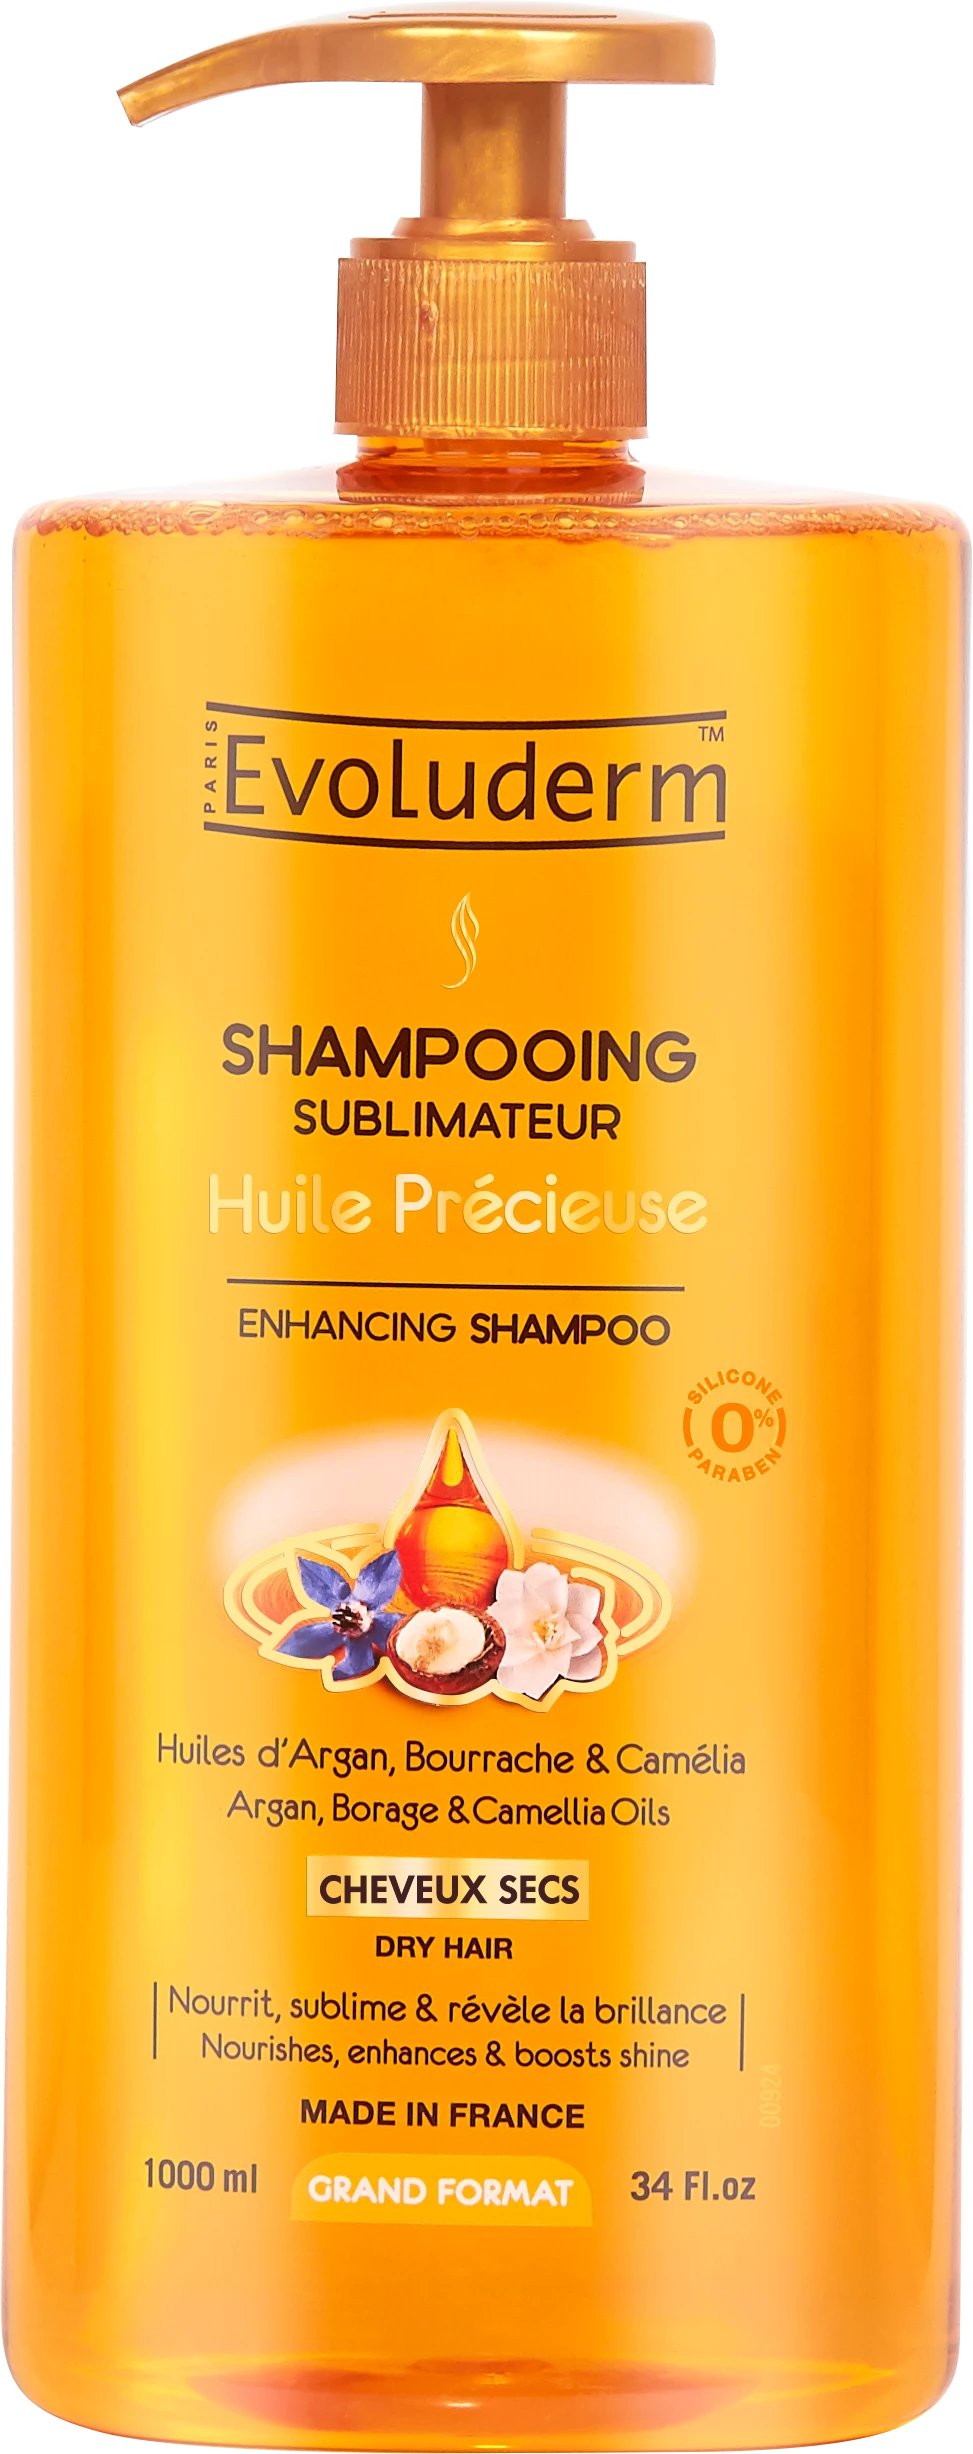 Precious Oil Enhancing Shampoo, 1L - EVOLUDERM